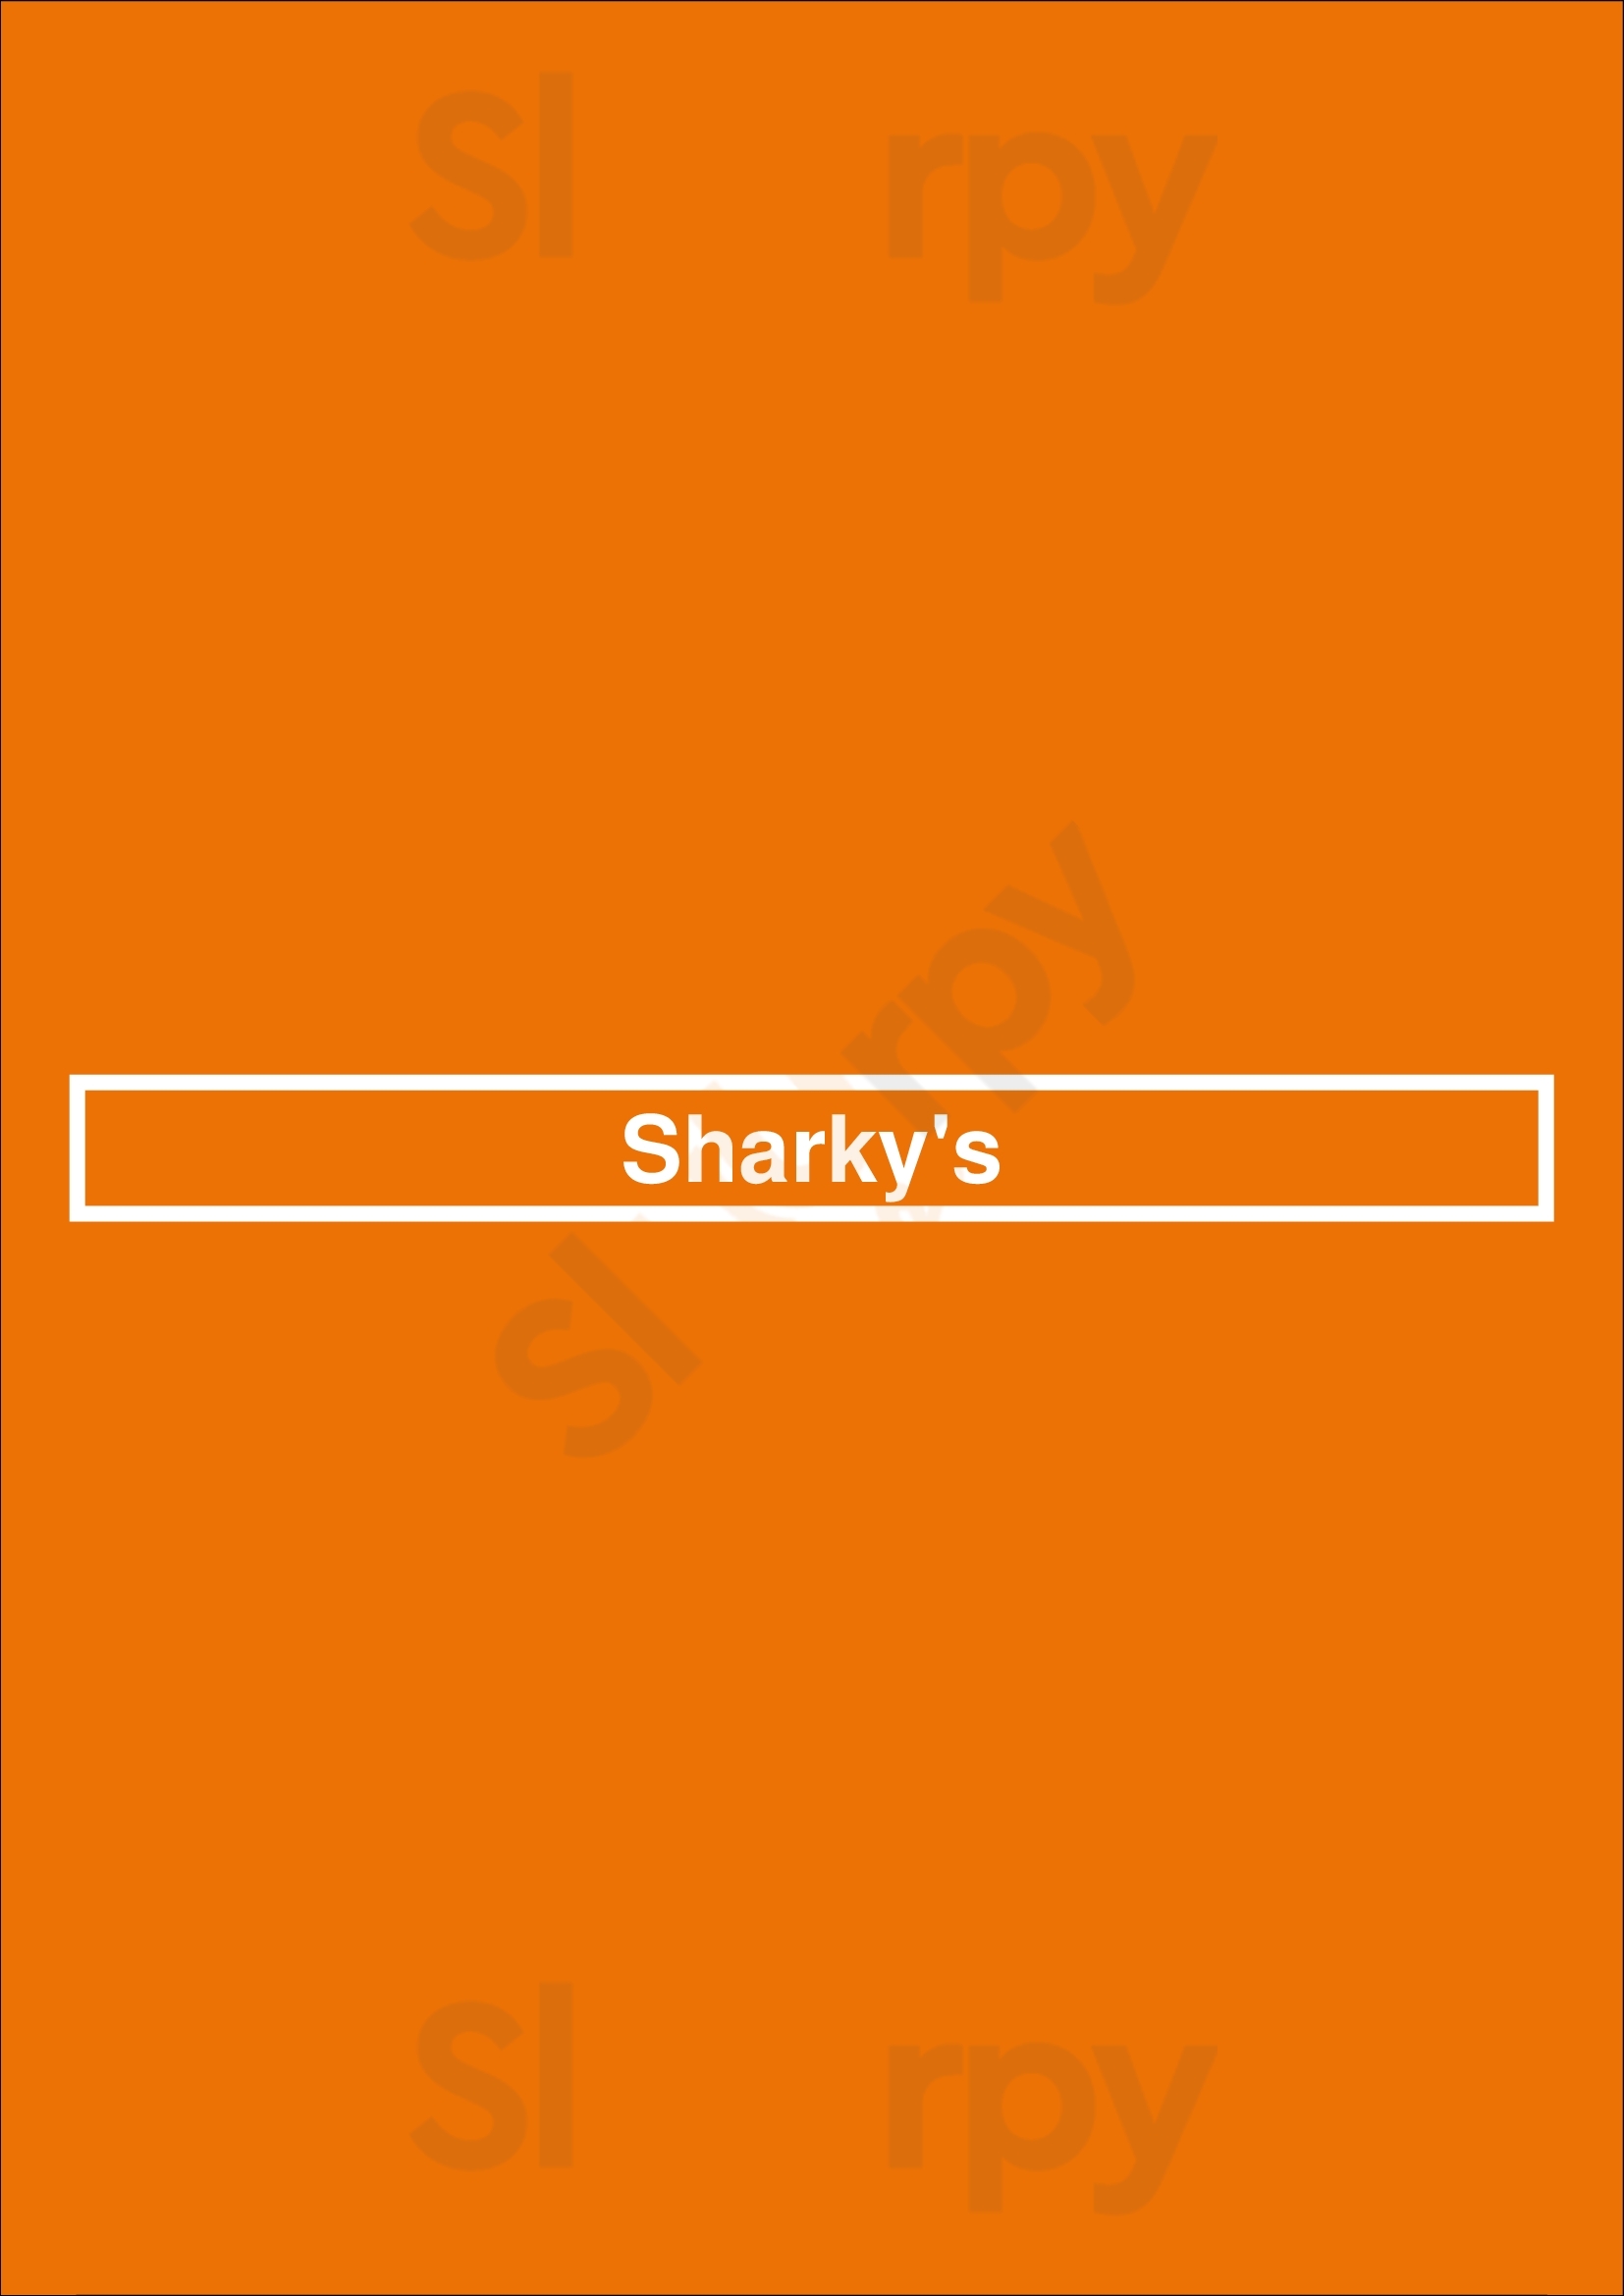 Sharky's Los Angeles Menu - 1